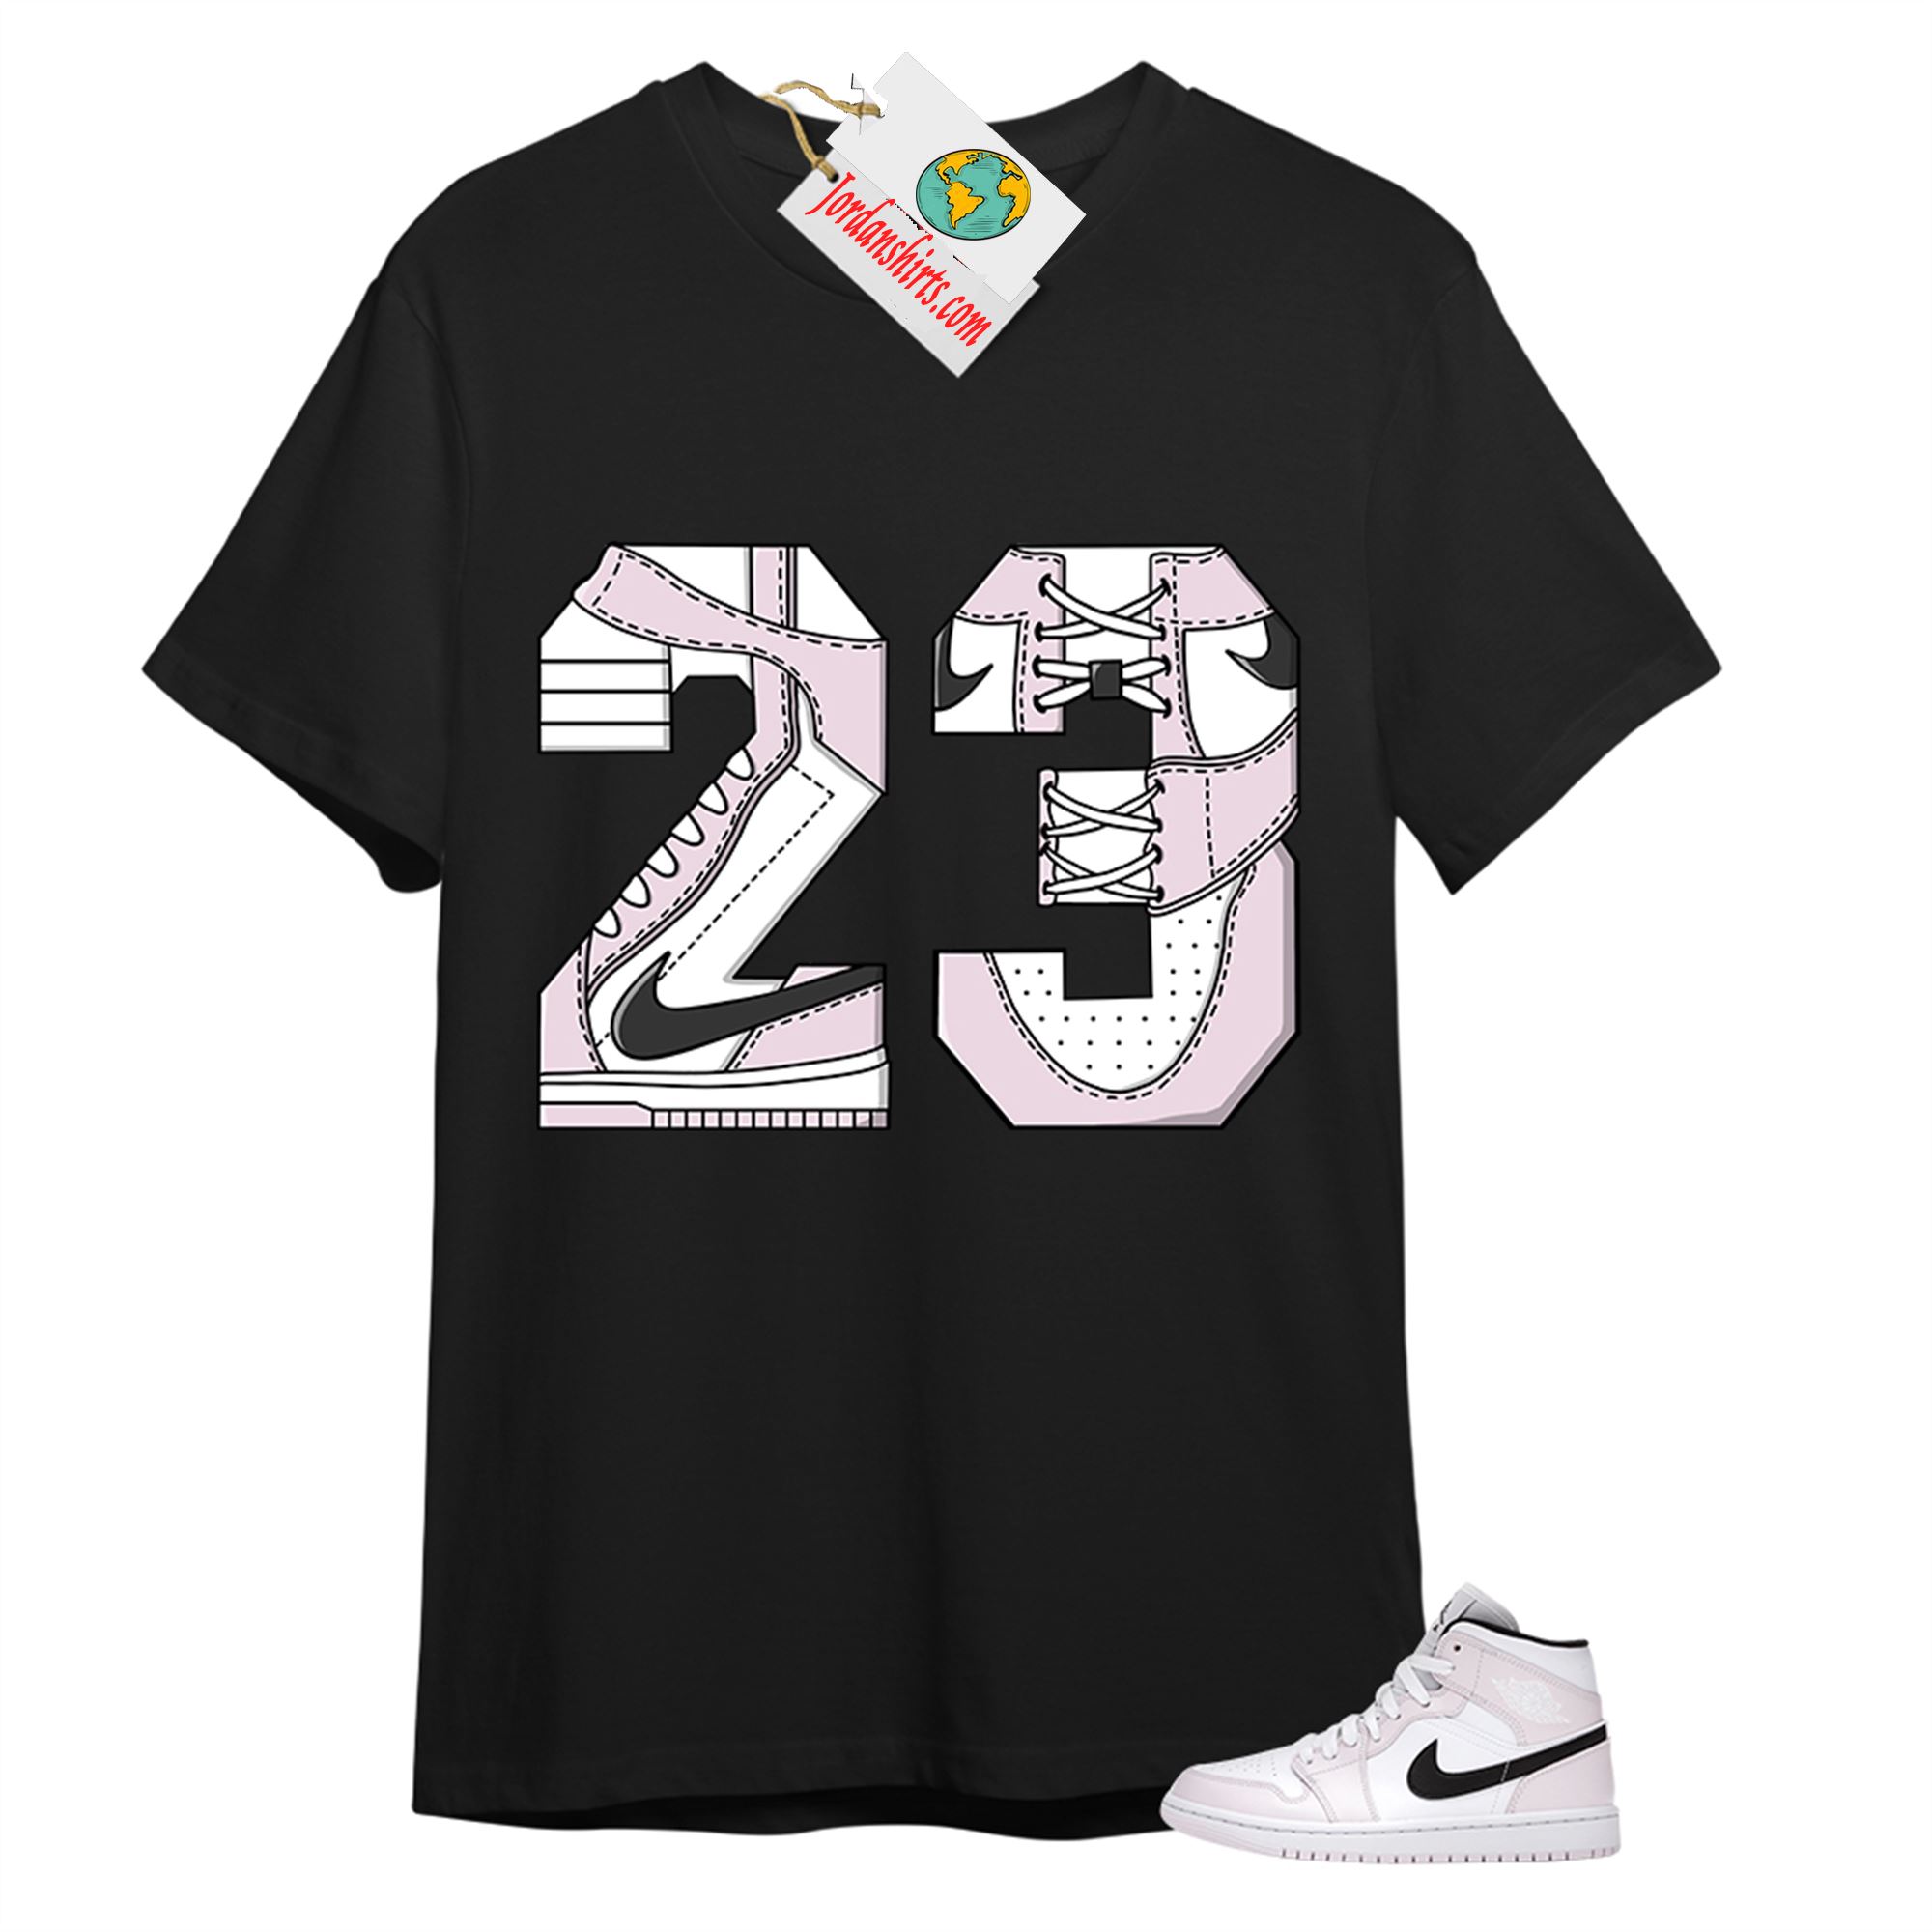 Jordan 1 Shirt, 23 Black T-shirt Air Jordan 1 Barely Rose 1s Full Size Up To 5xl